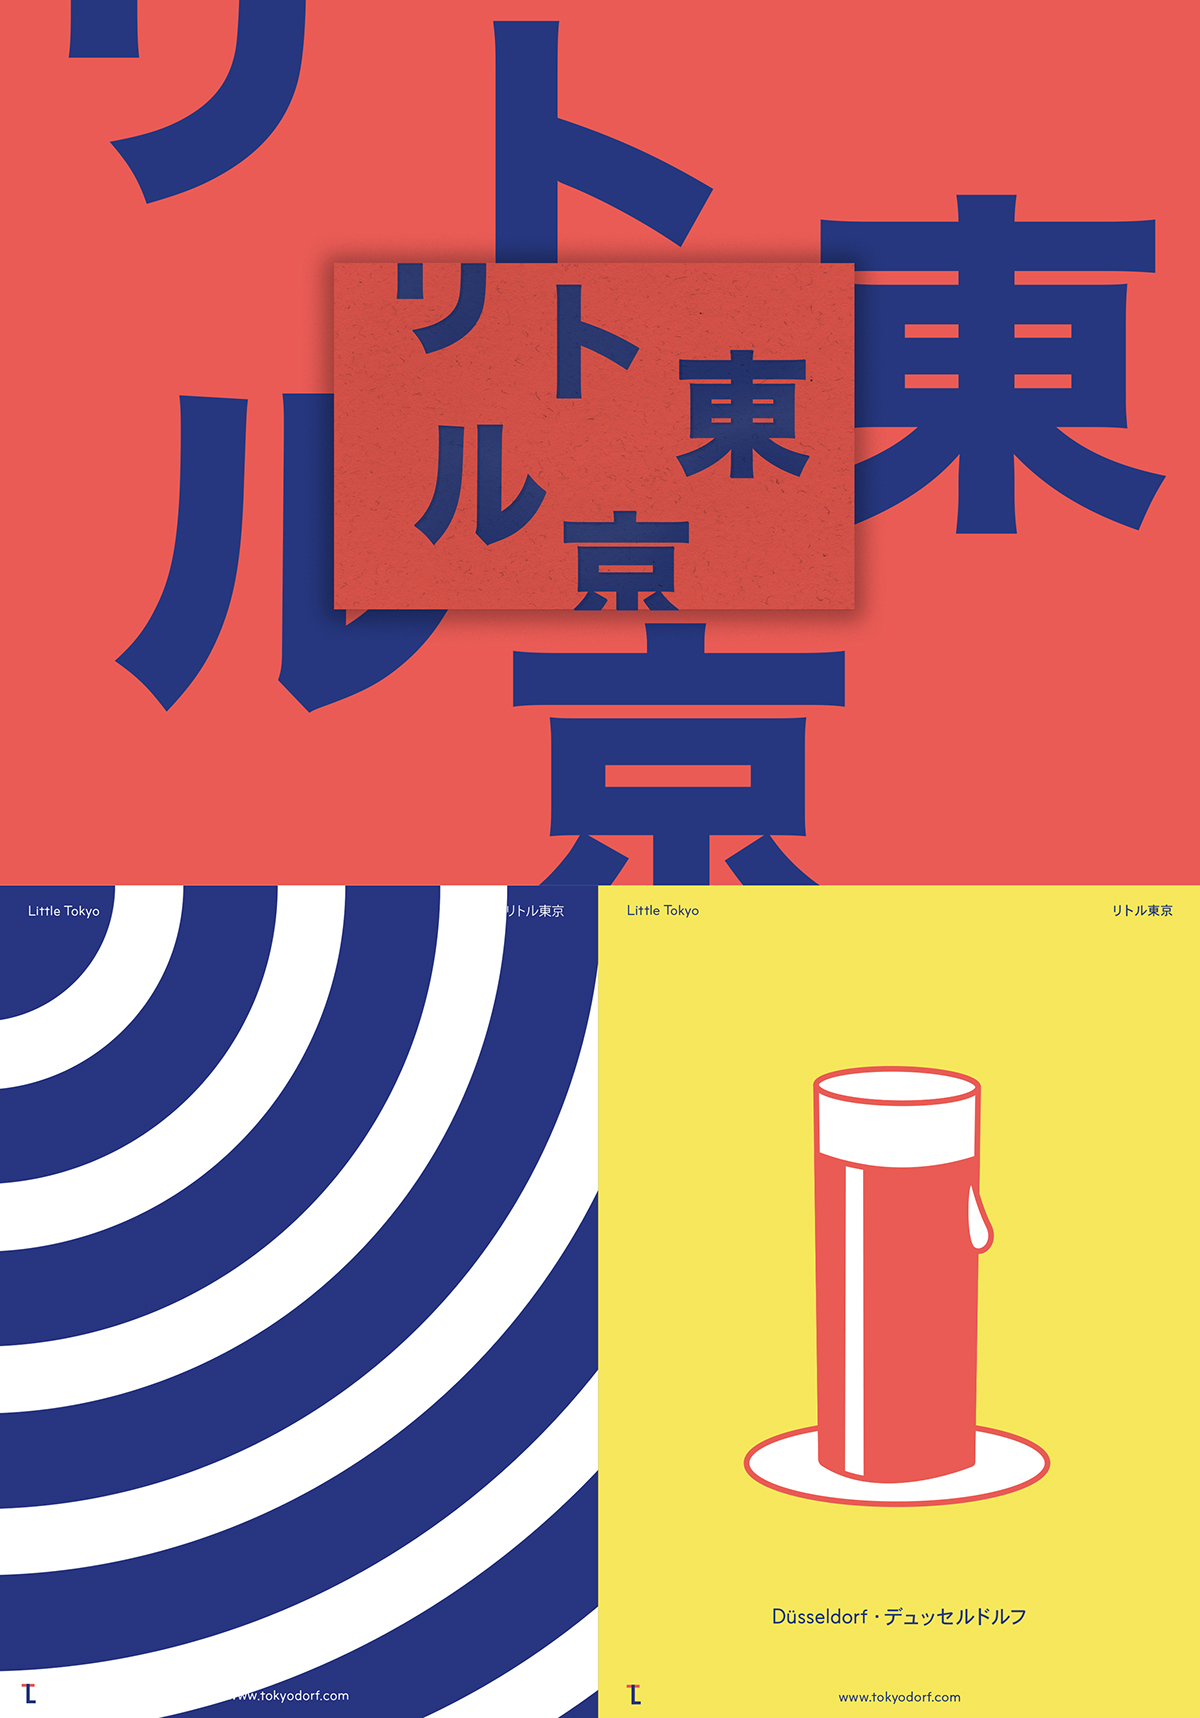 identity colorfful Düsseldorf japanese littletokyo poster